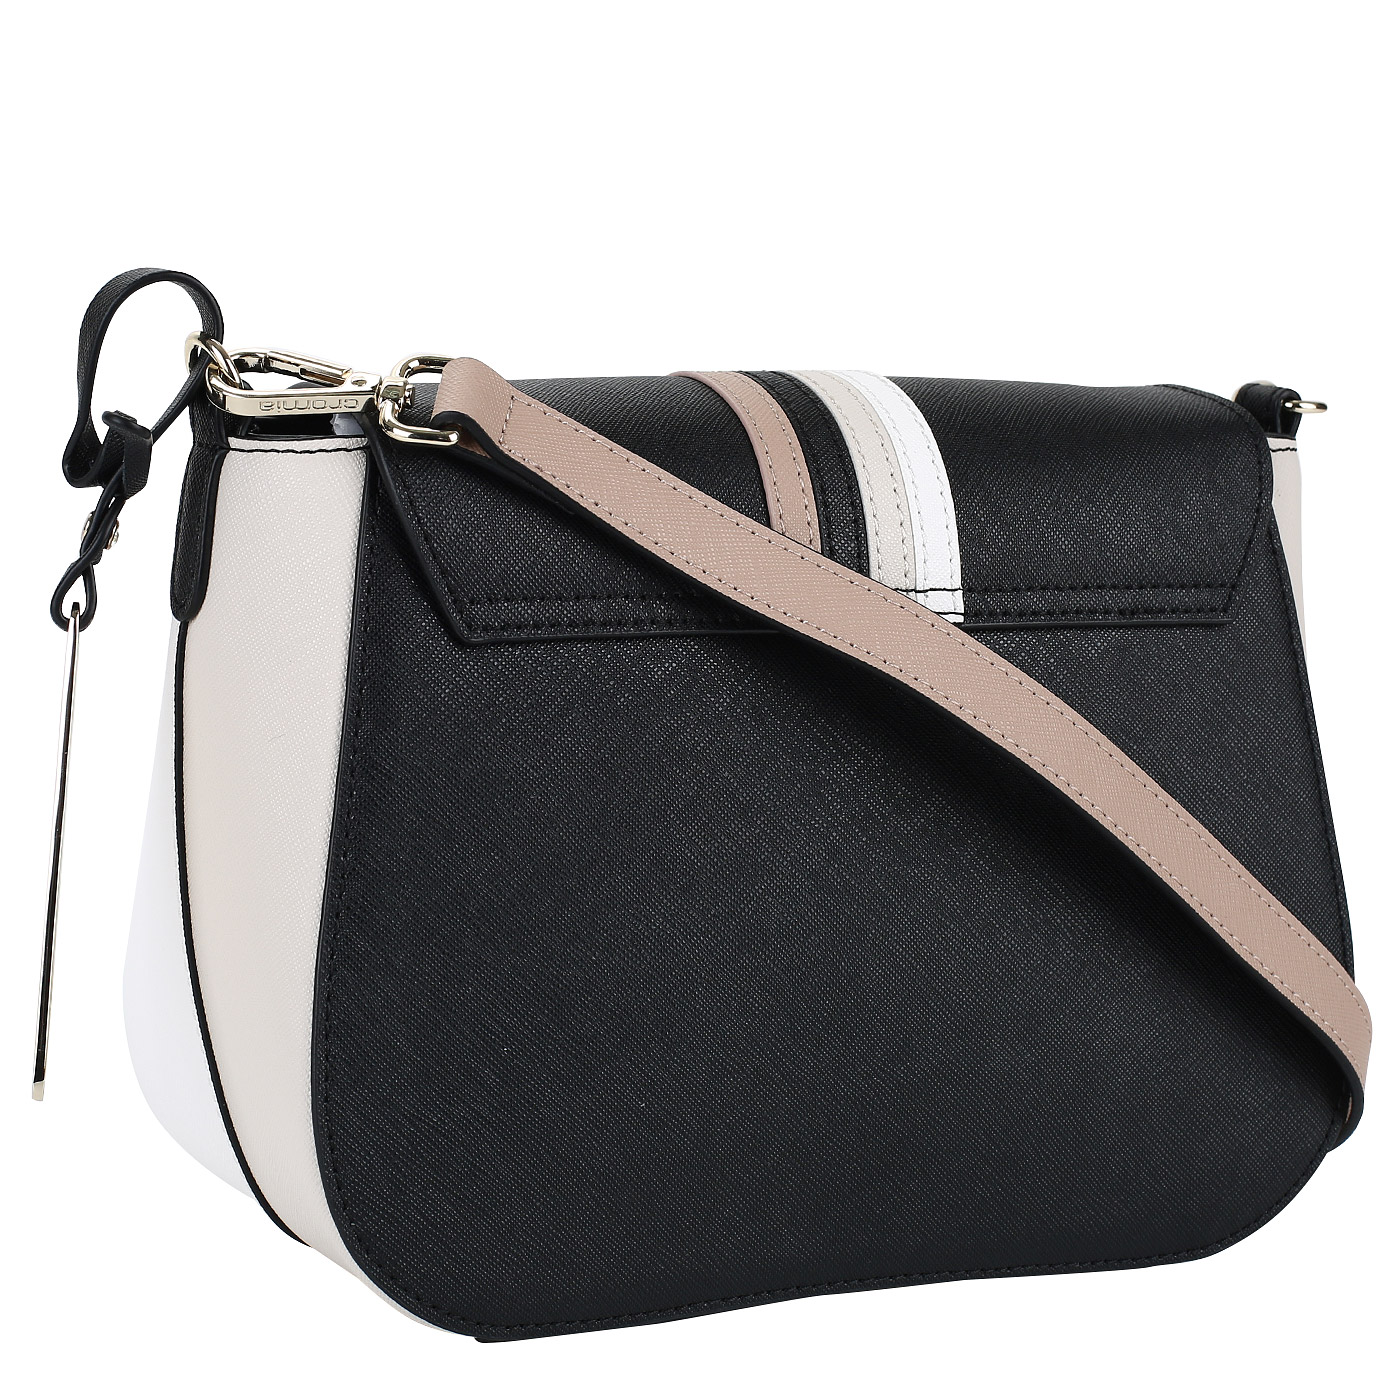 Компактная сумочка из сафьяна с плечевым ремешком Cromia Maeva